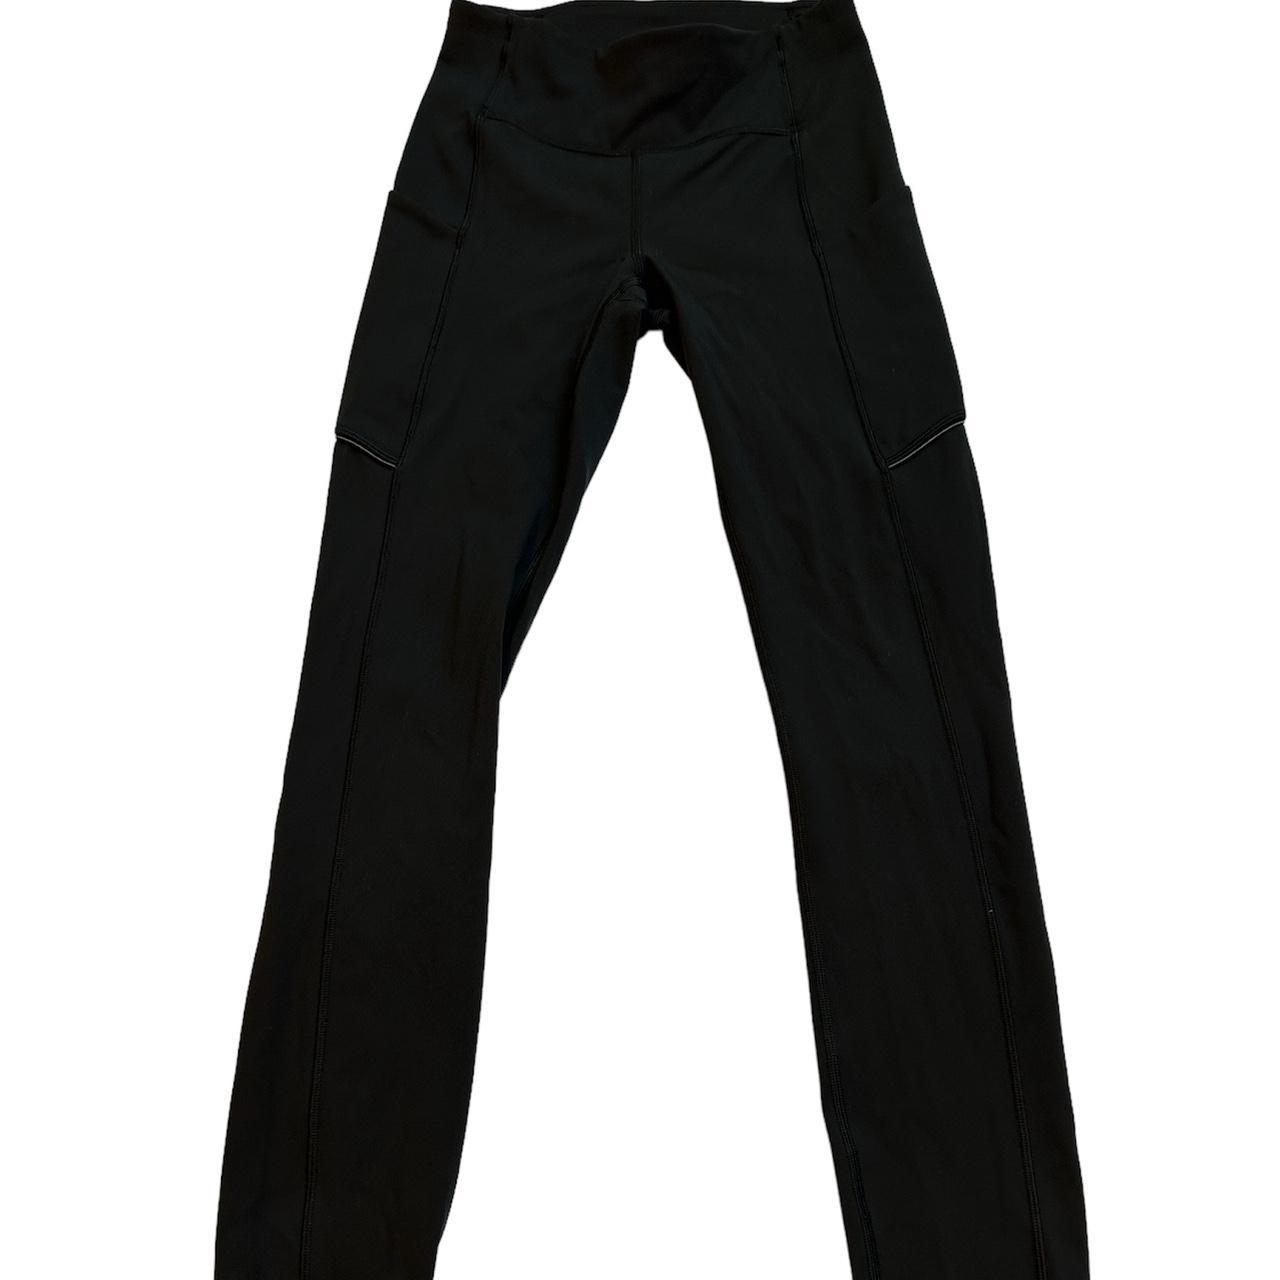 Black LuluLemon leggings. WITH two pockets on both